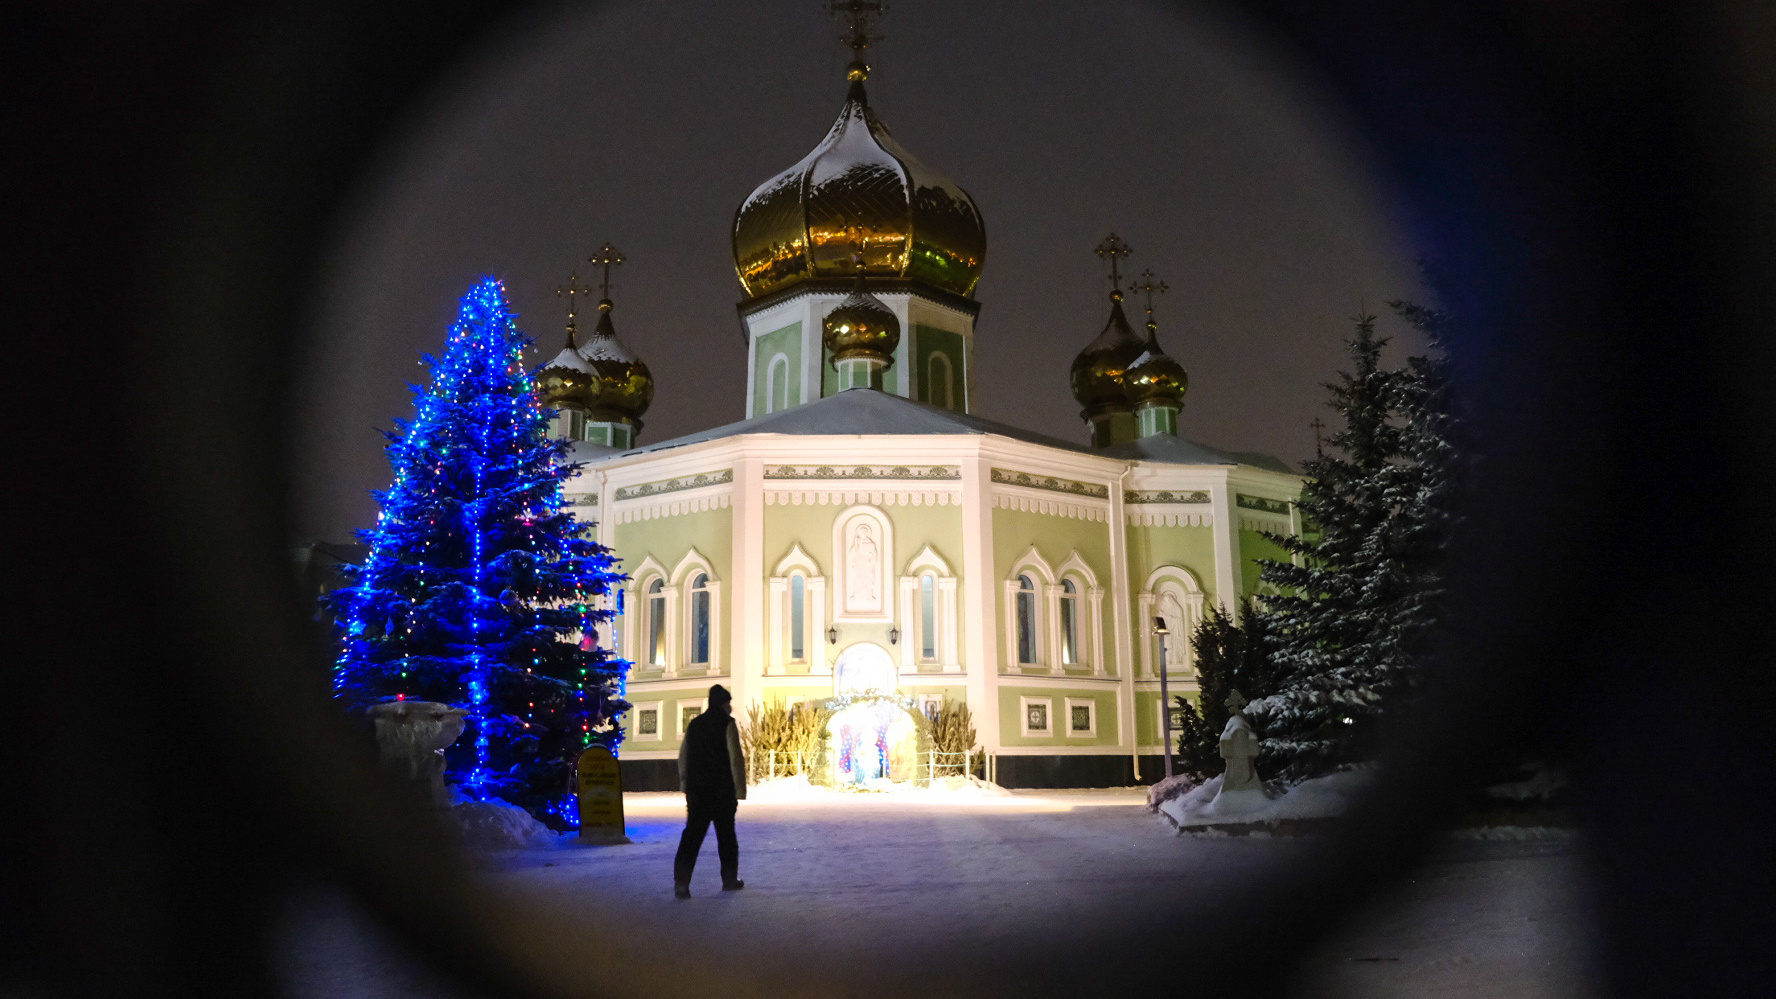 Вход на службу по билетам, разметка на полу: Челябинск отметил Рождество Христово